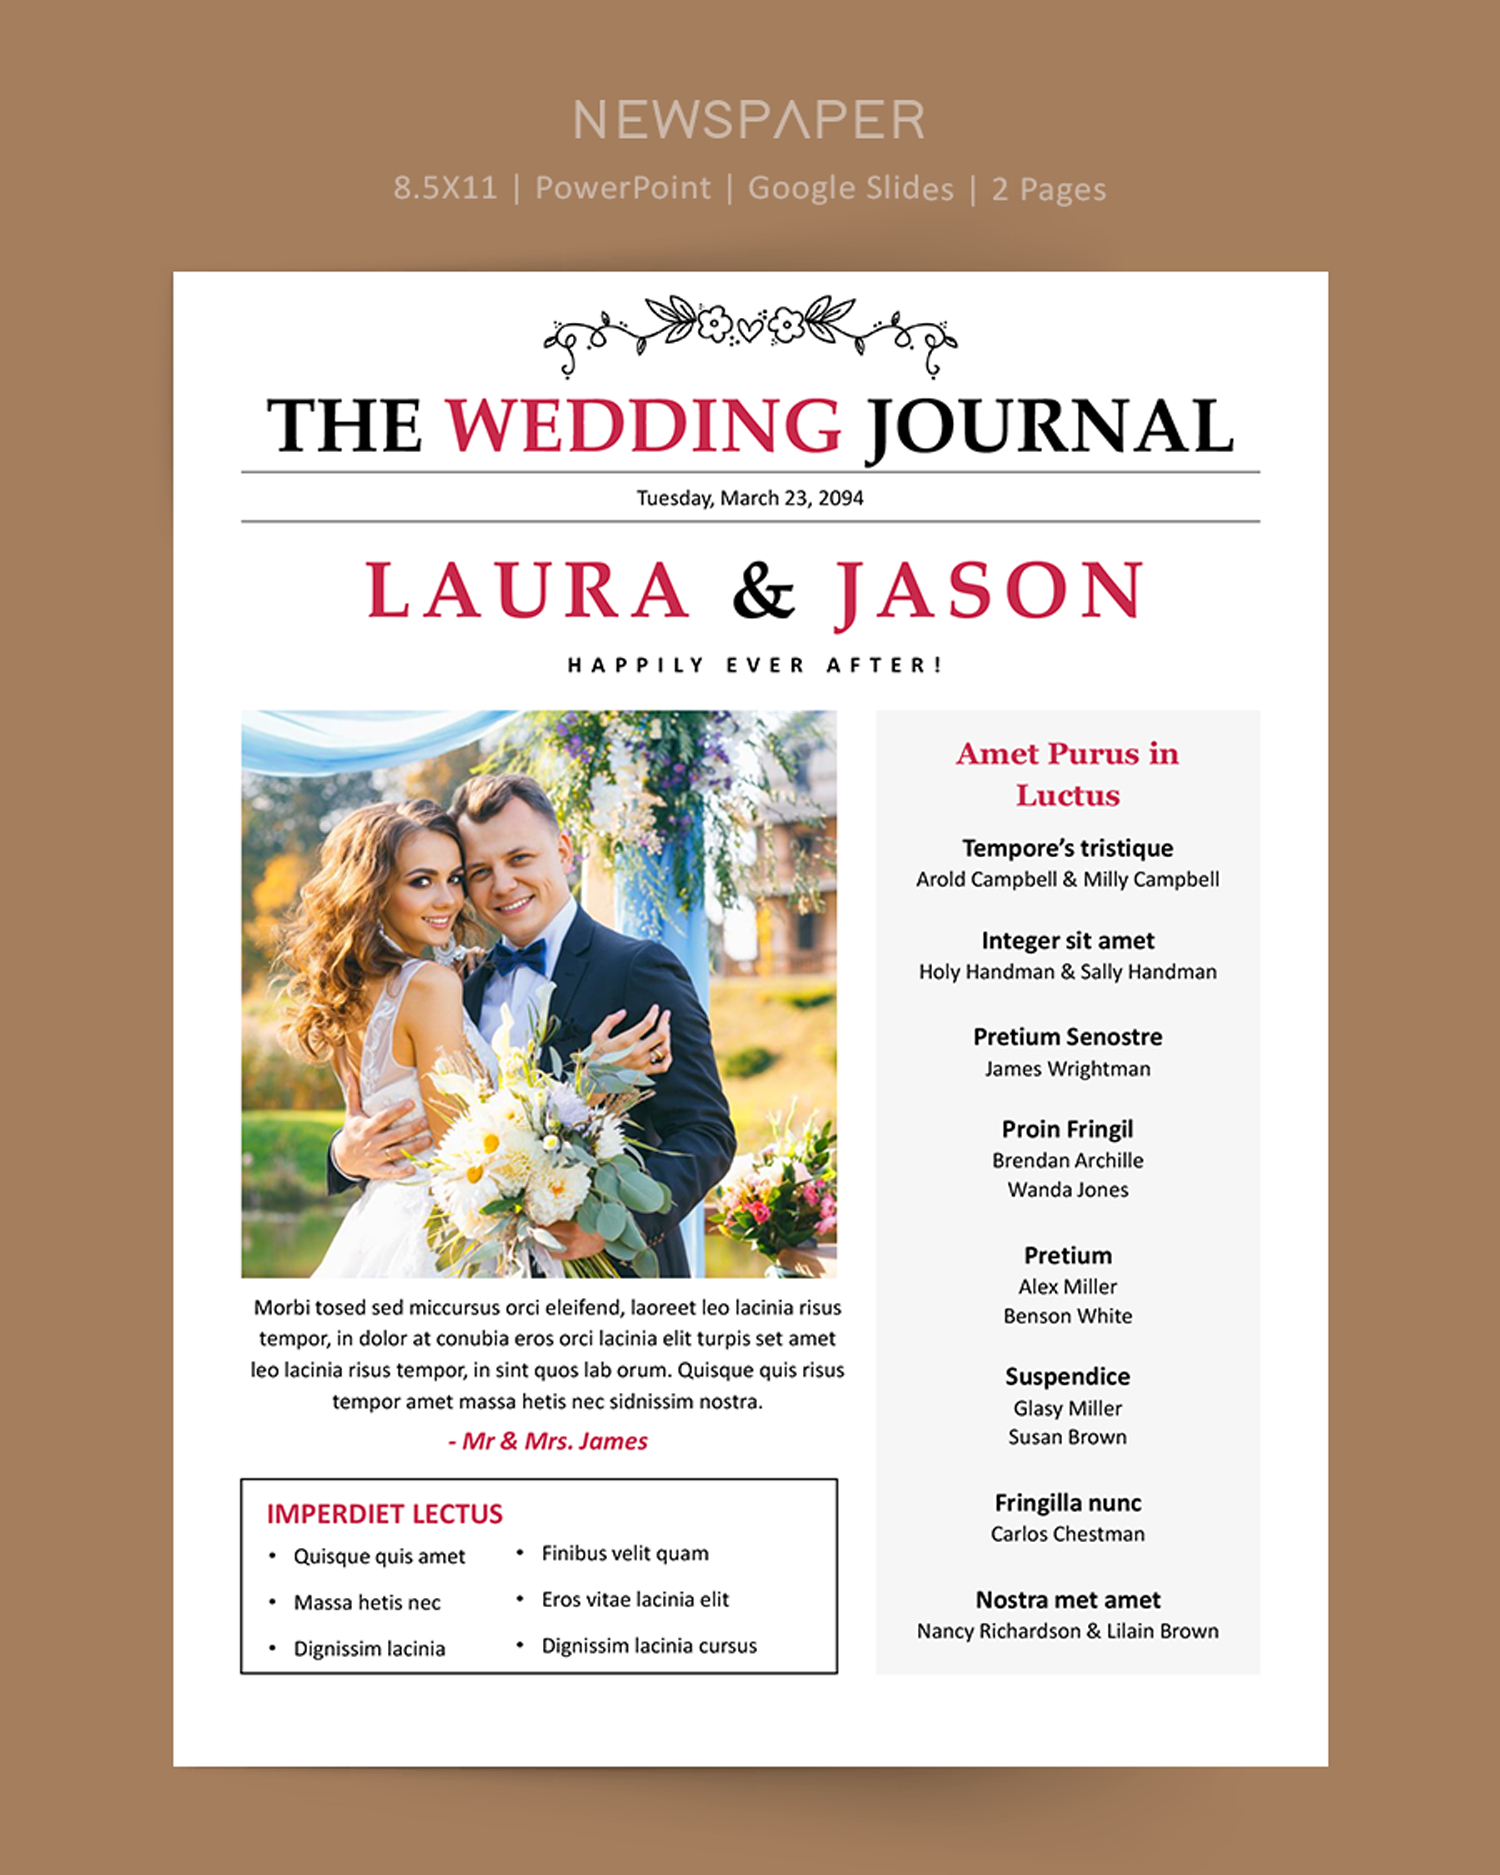 8.5x11 Newspaper Wedding Program Template - PowerPoint, Google Slides